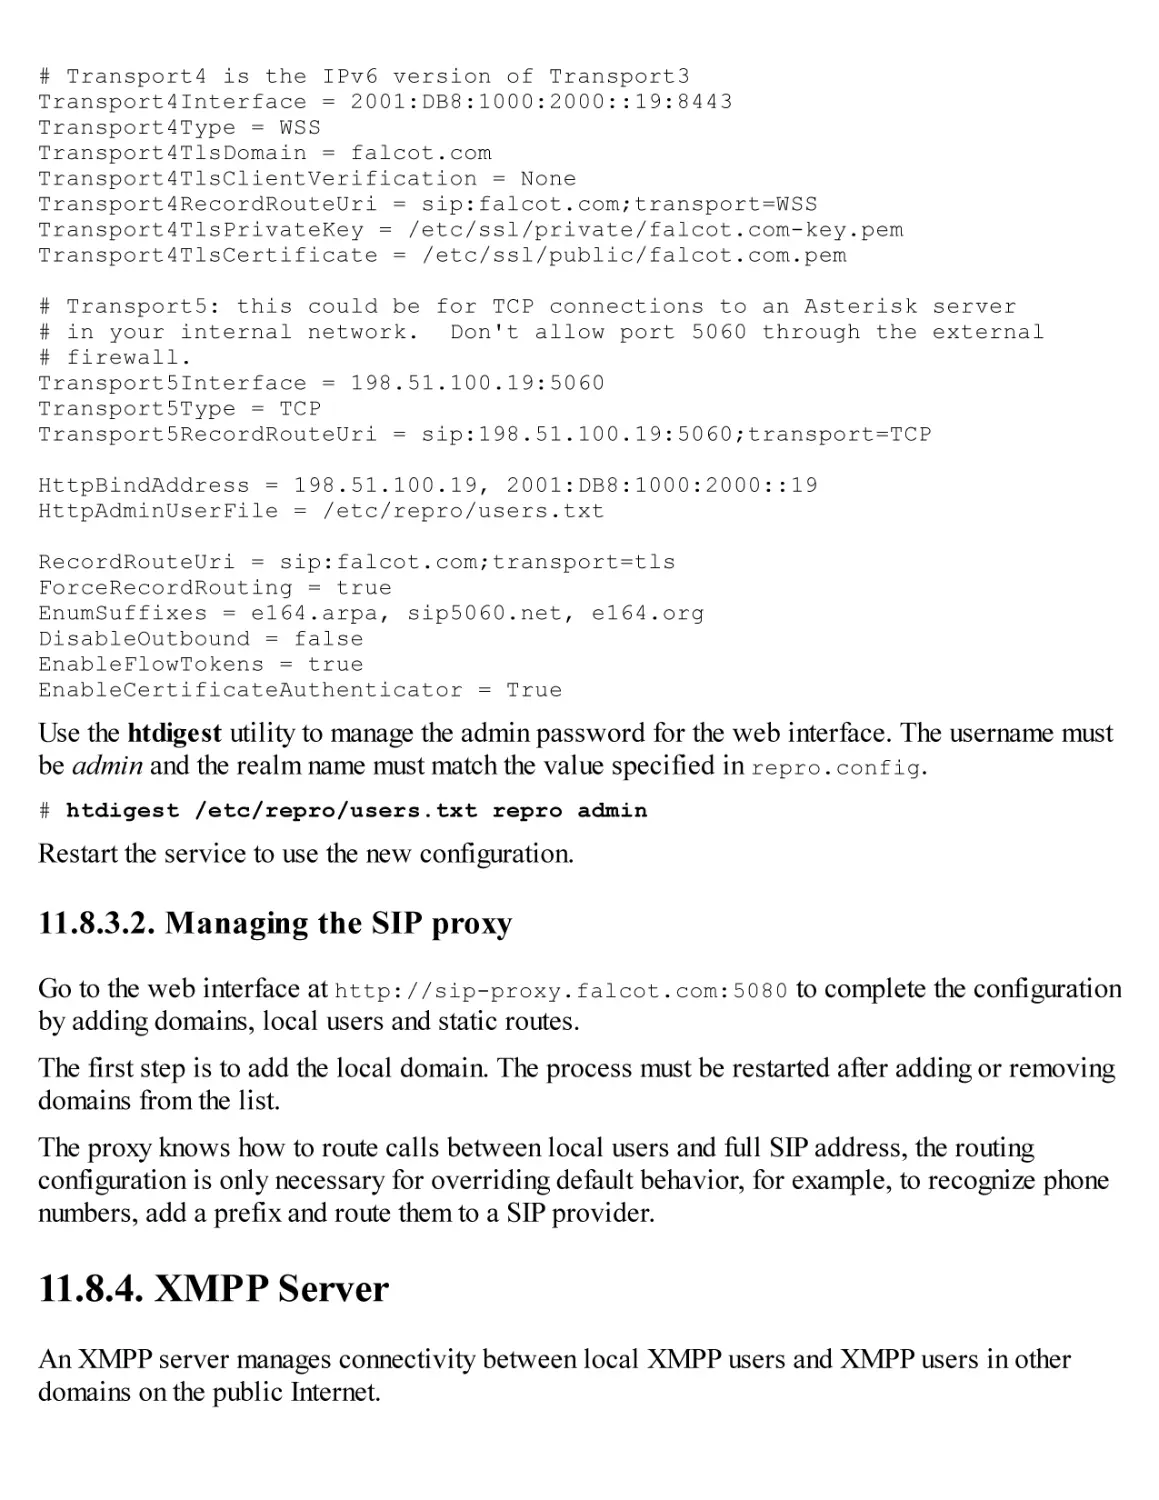 11.8.3.2. Managing the SIP proxy
11.8.4. XMPP Server